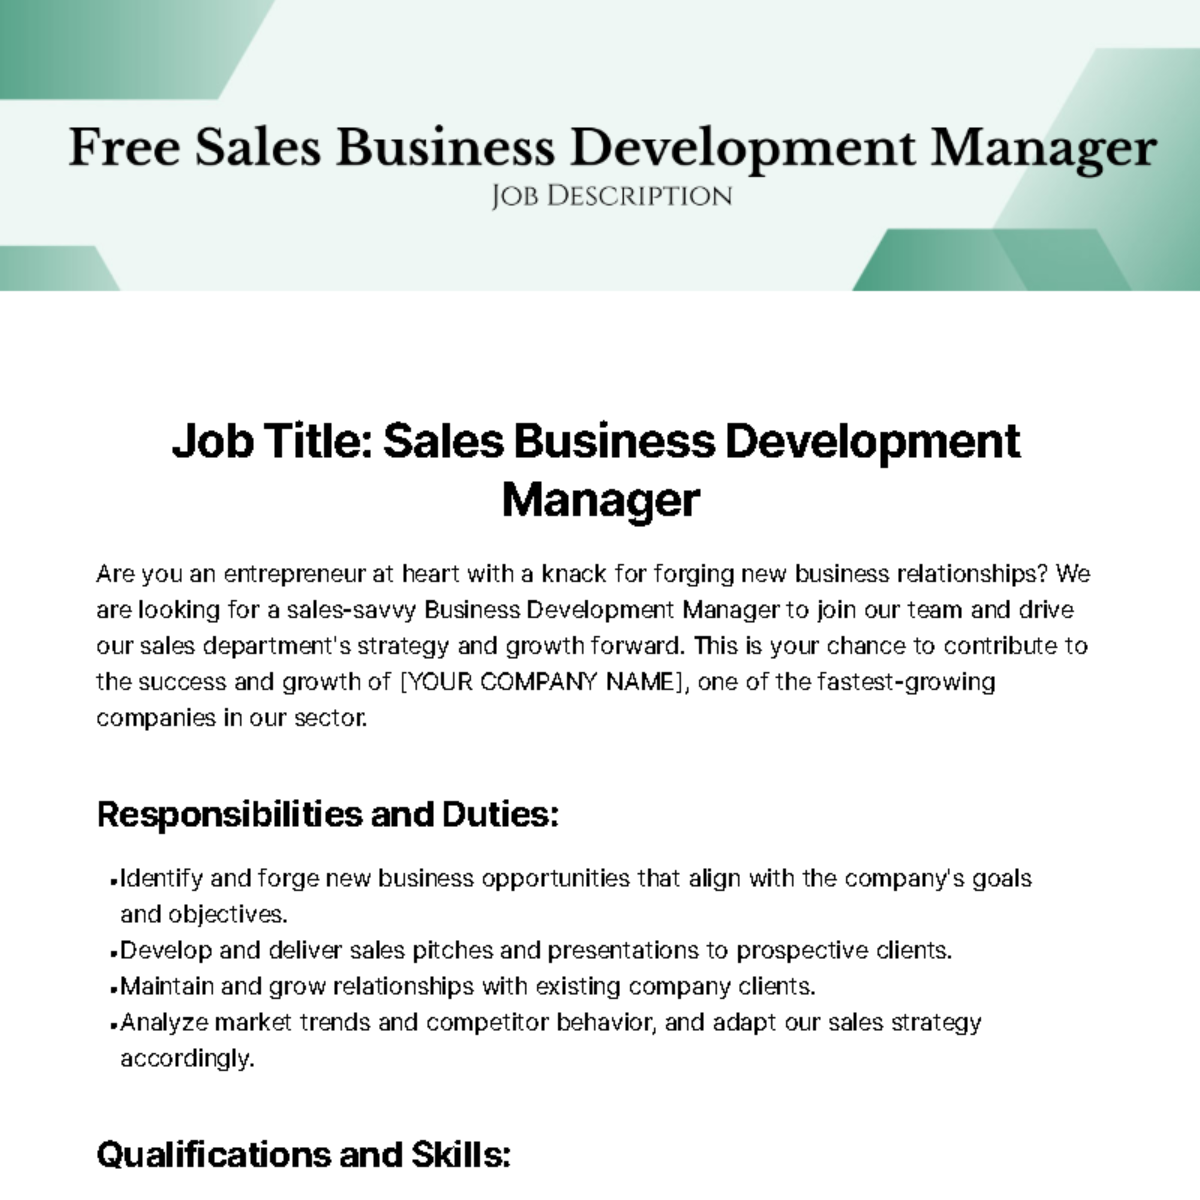 Free Sales Business Development Manager Job Description Template